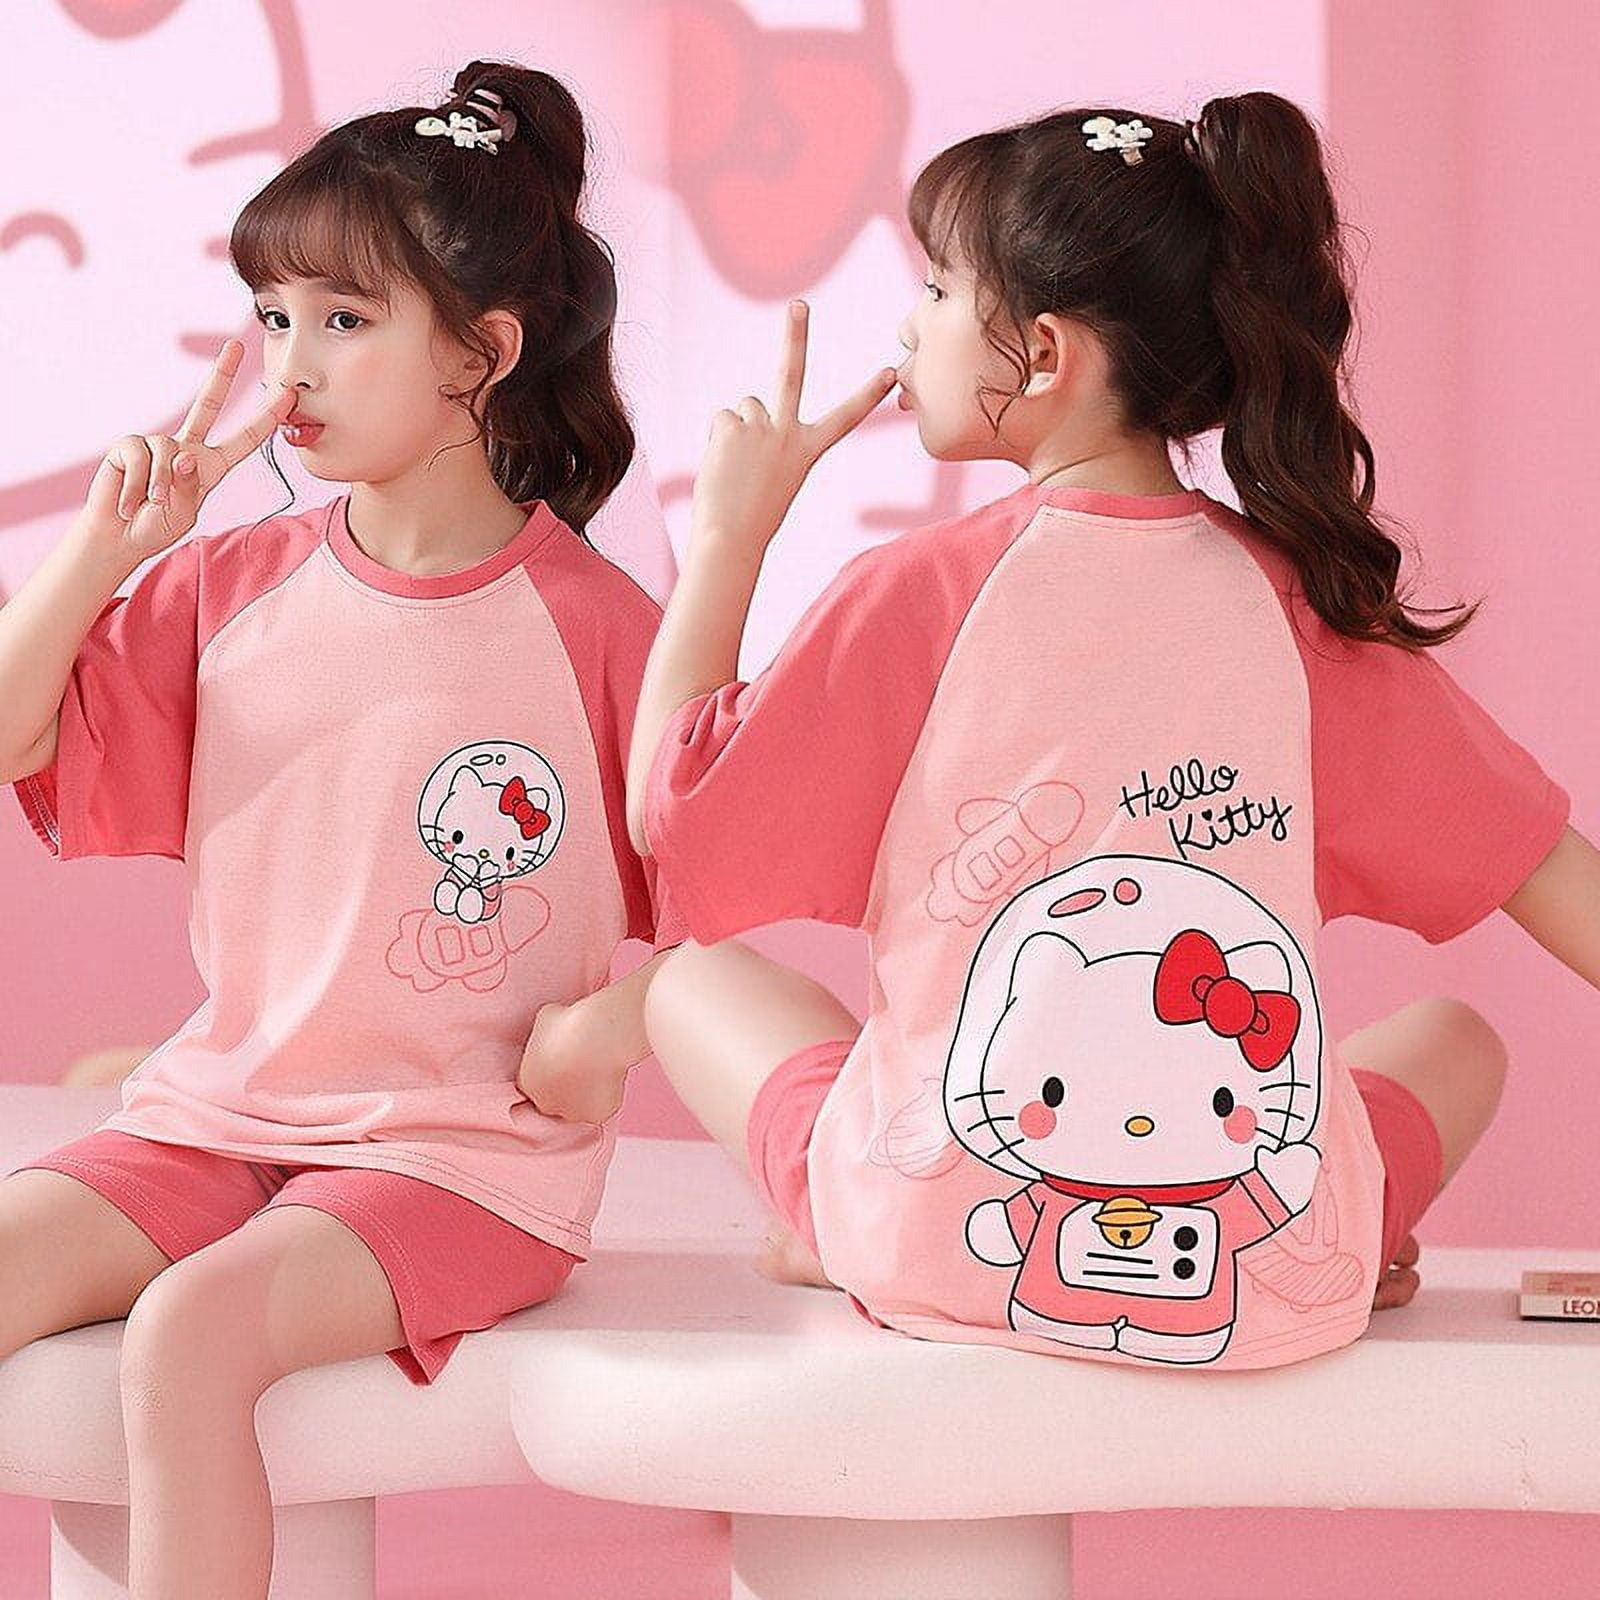 Sanrio Anime Melody Hello Kitty Cinnamoroll Kuromi Children Pajamas Girl Boy Short Sleeve T Shirt Shorts Suit Casual Clothing d829efbb bccb 46cb 8b15 7fdda96c6909.1b9fcf38d053ca6c97e2ccc0f36c7bc7